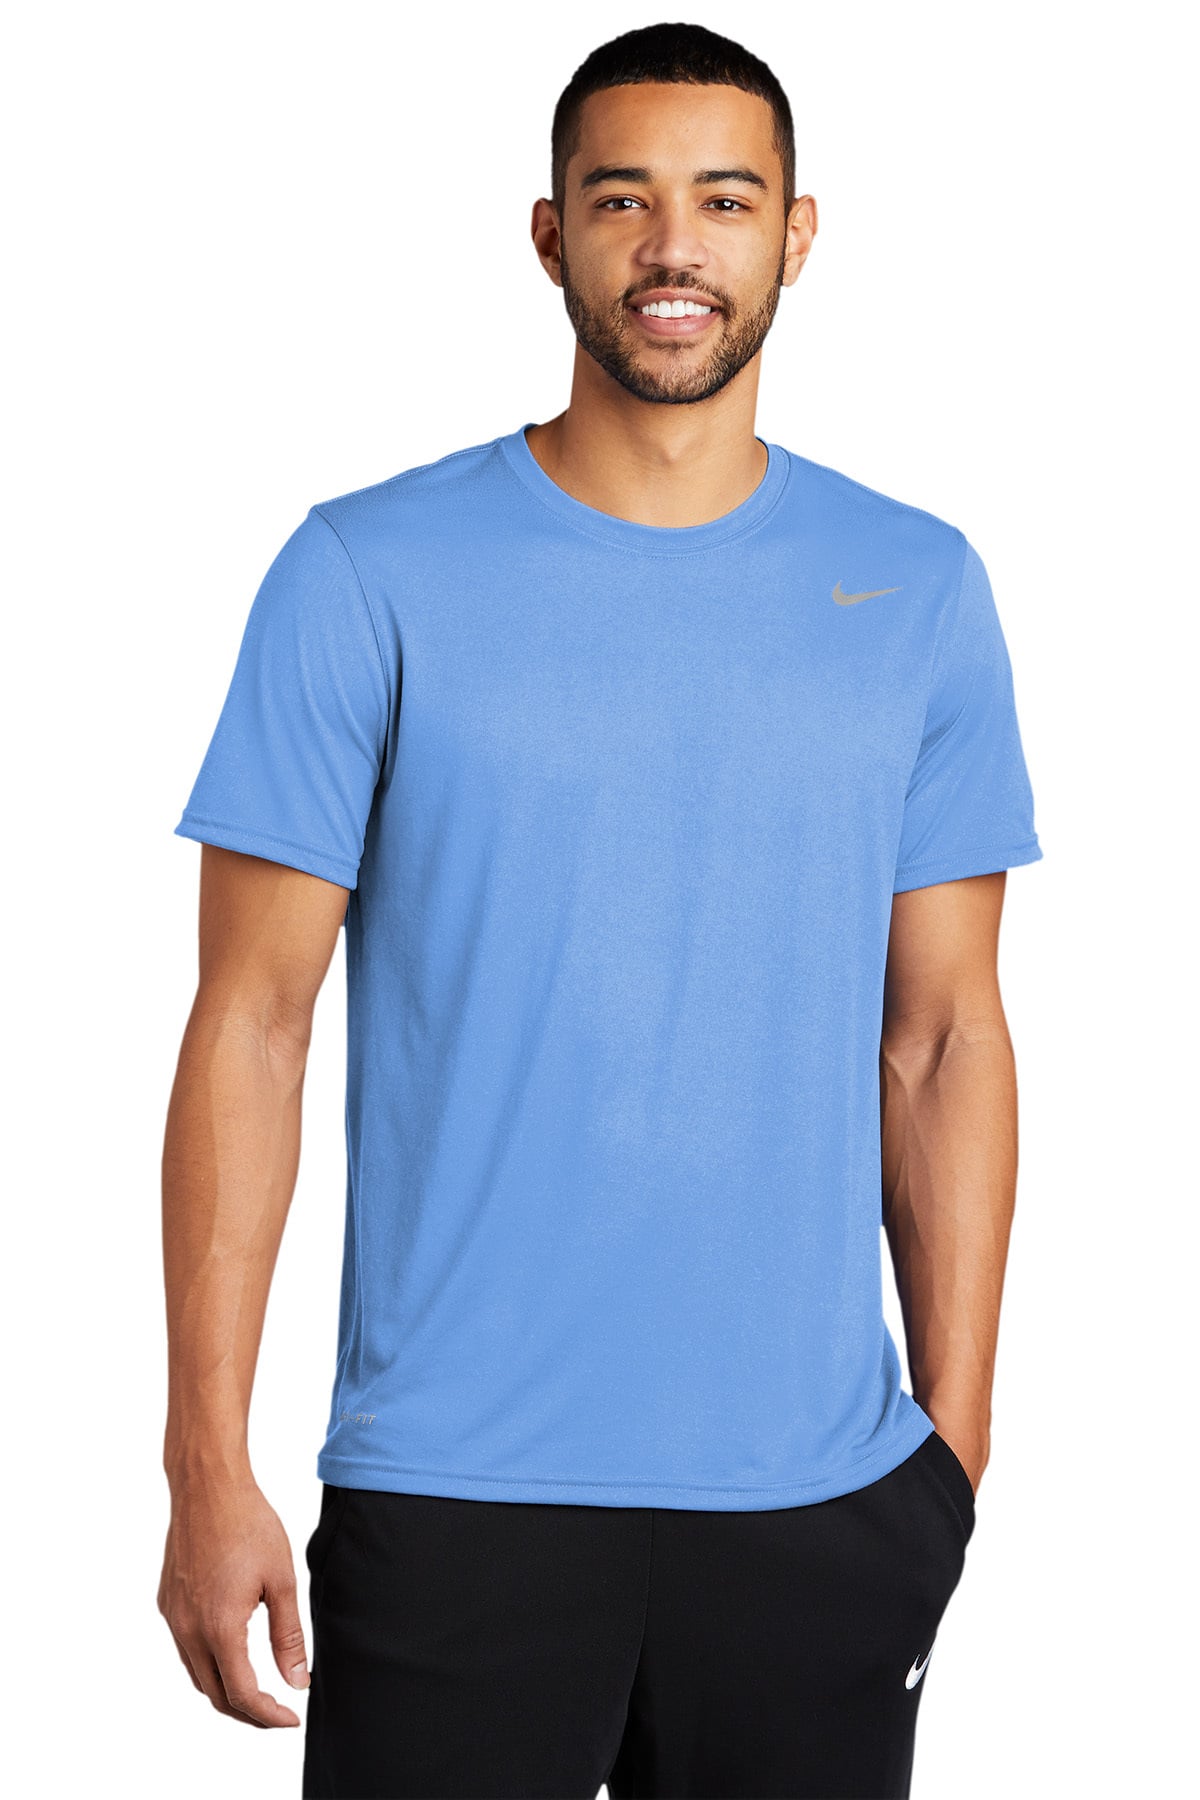 T-shirts - BT Imprintables Shirts